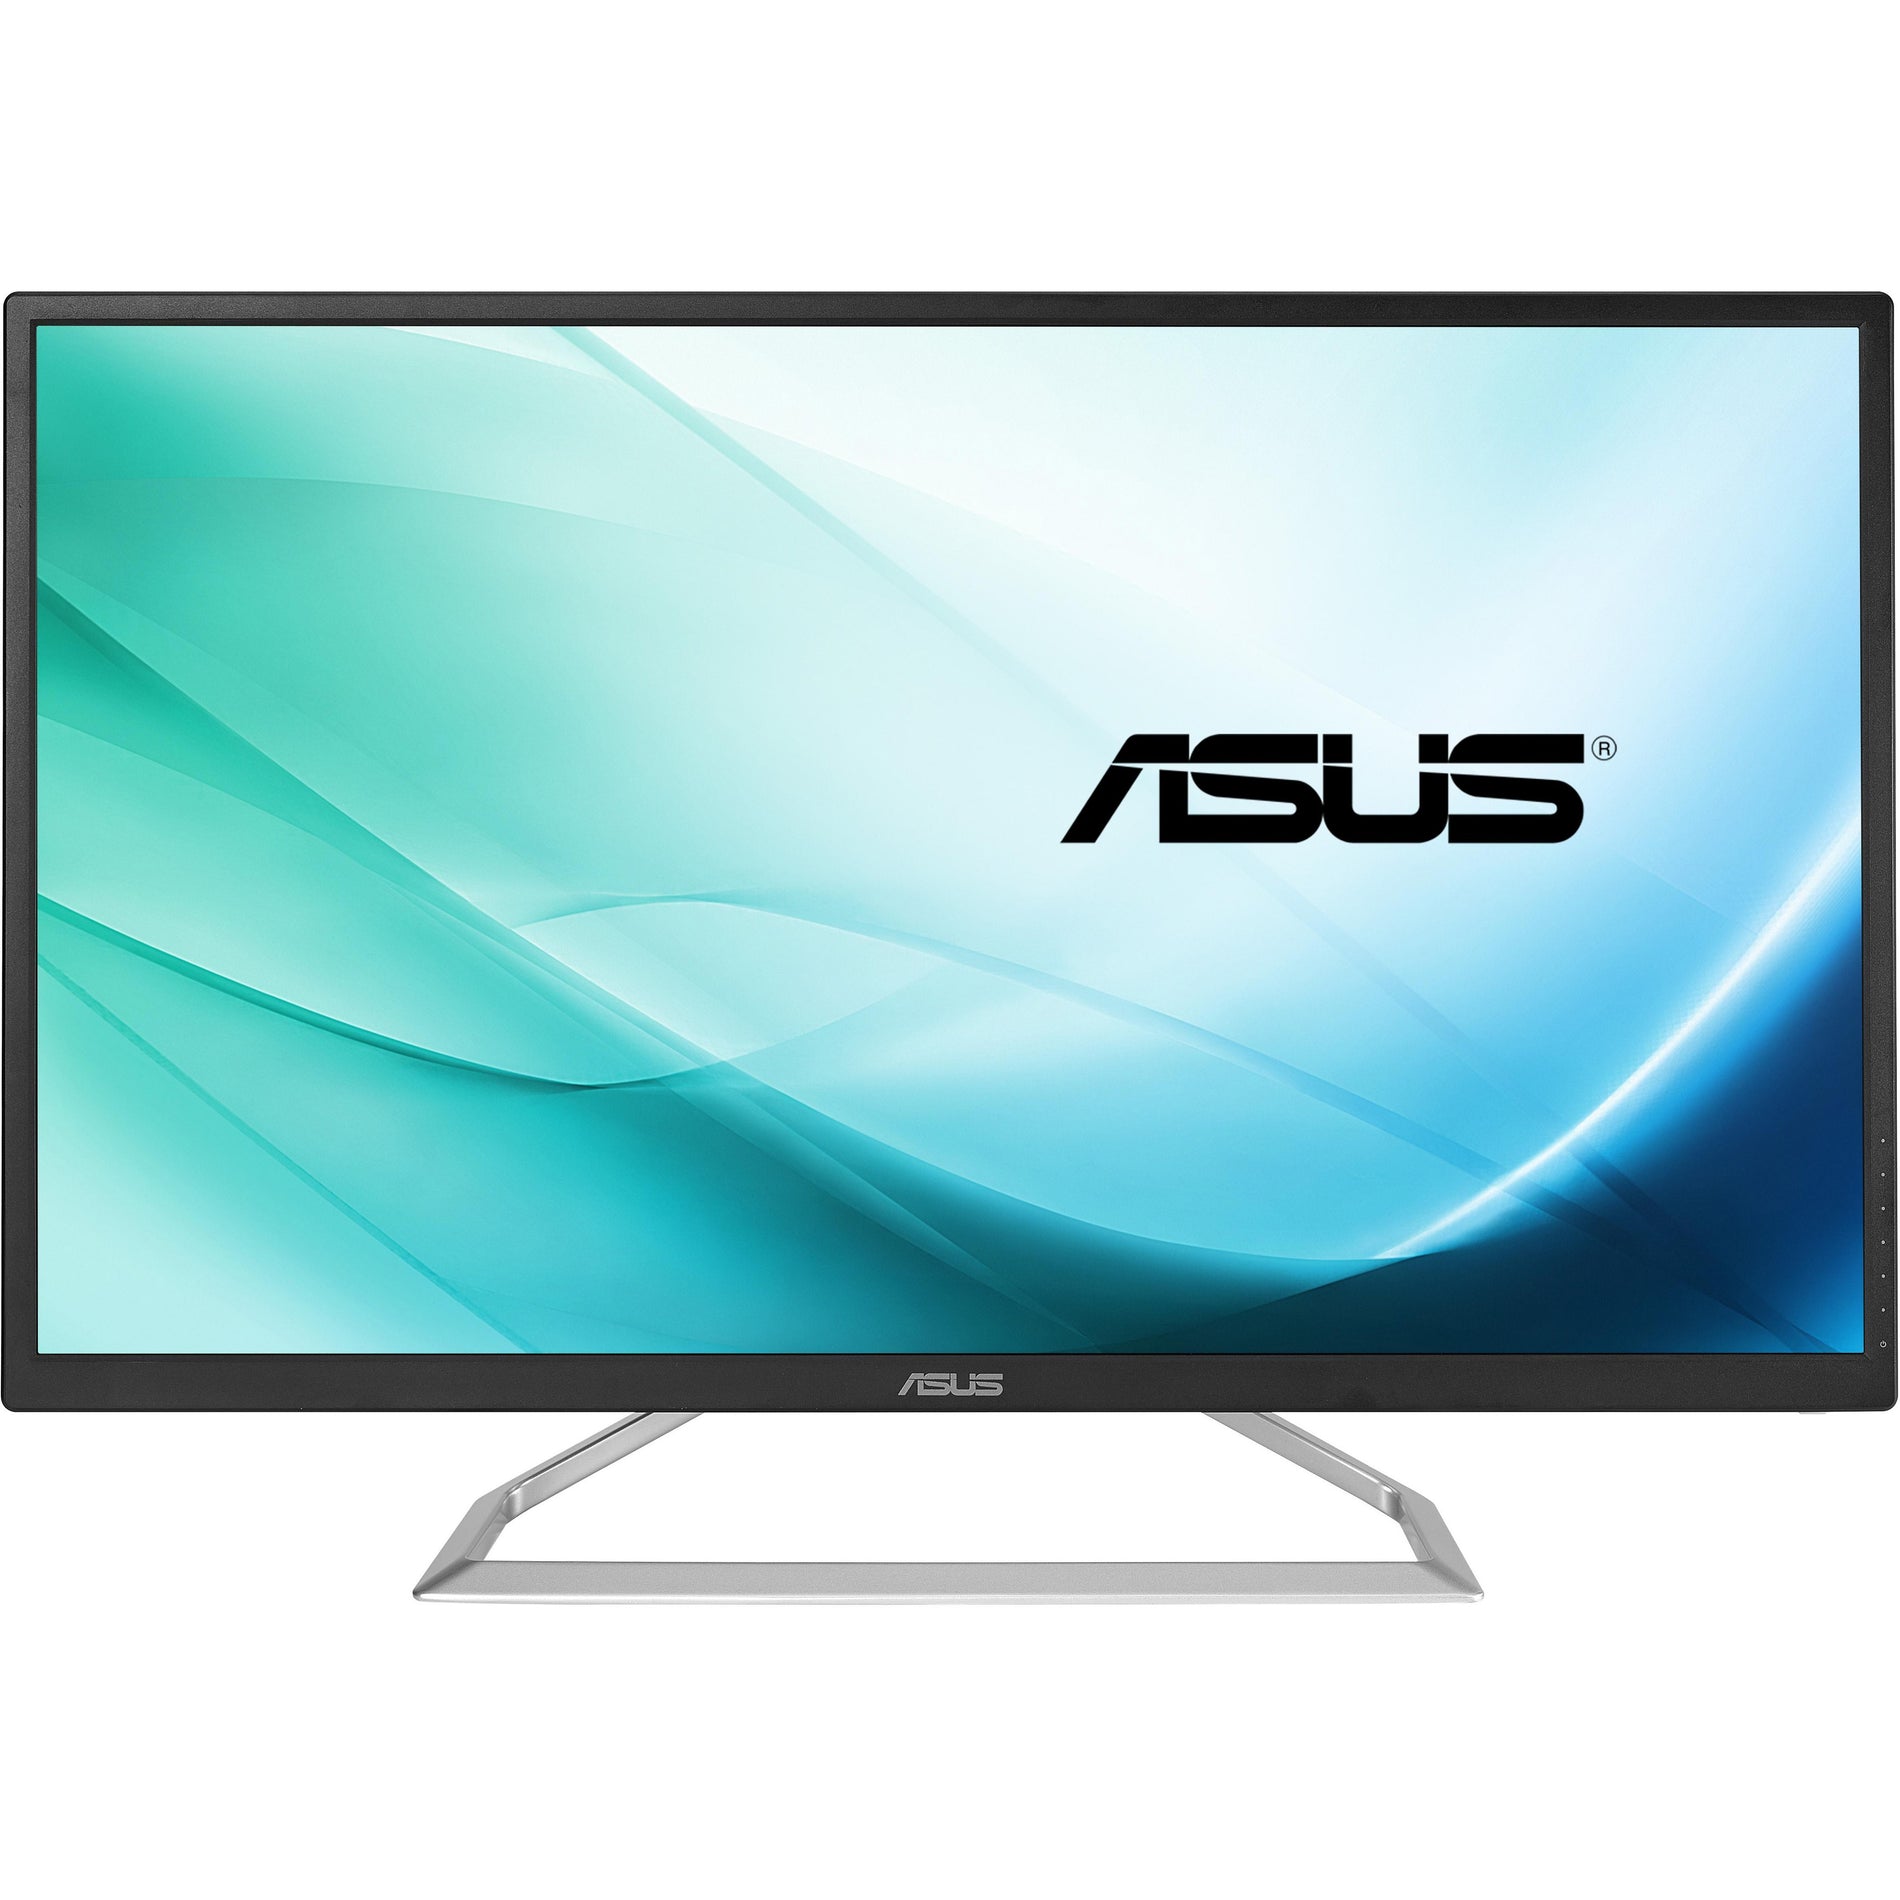 Asus VA325H Widescreen LCD Monitor, 31.5" Full HD, 16:9, 250 Nit Brightness, 100,000,000:1 Contrast Ratio